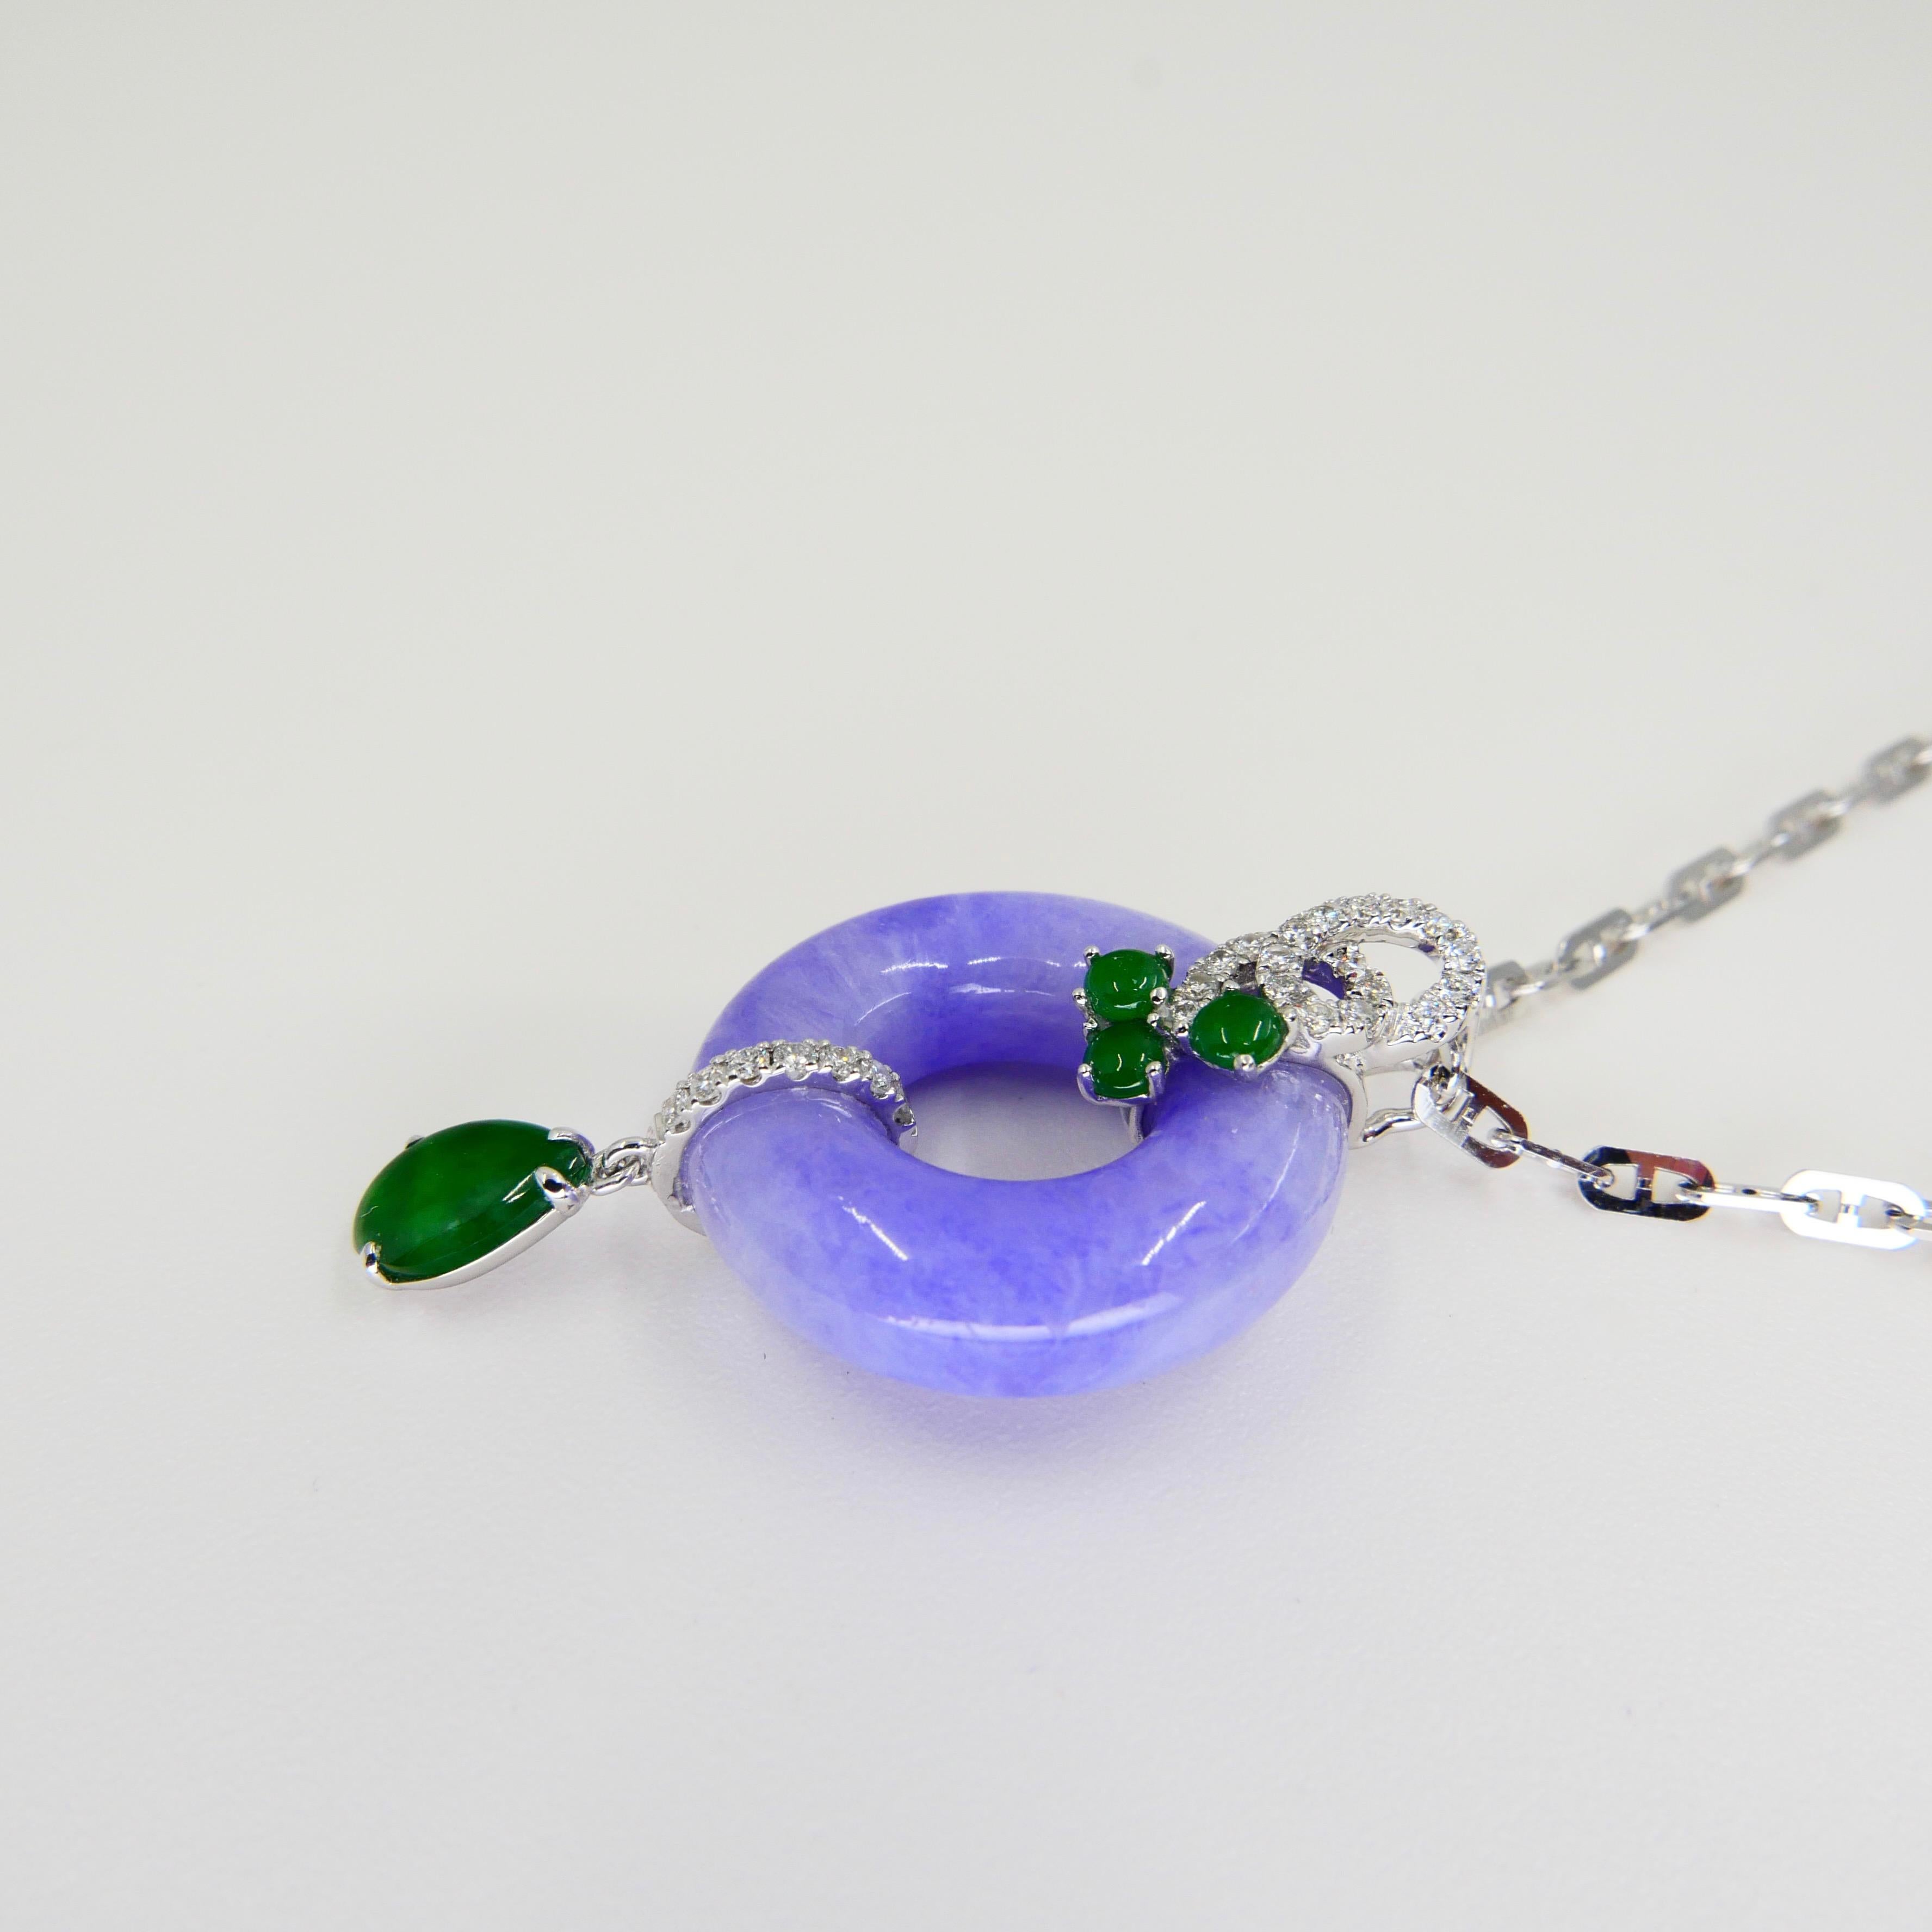 Certified Lavender & Imperial Green Jade Diamond Pendant Drop Necklace.  6